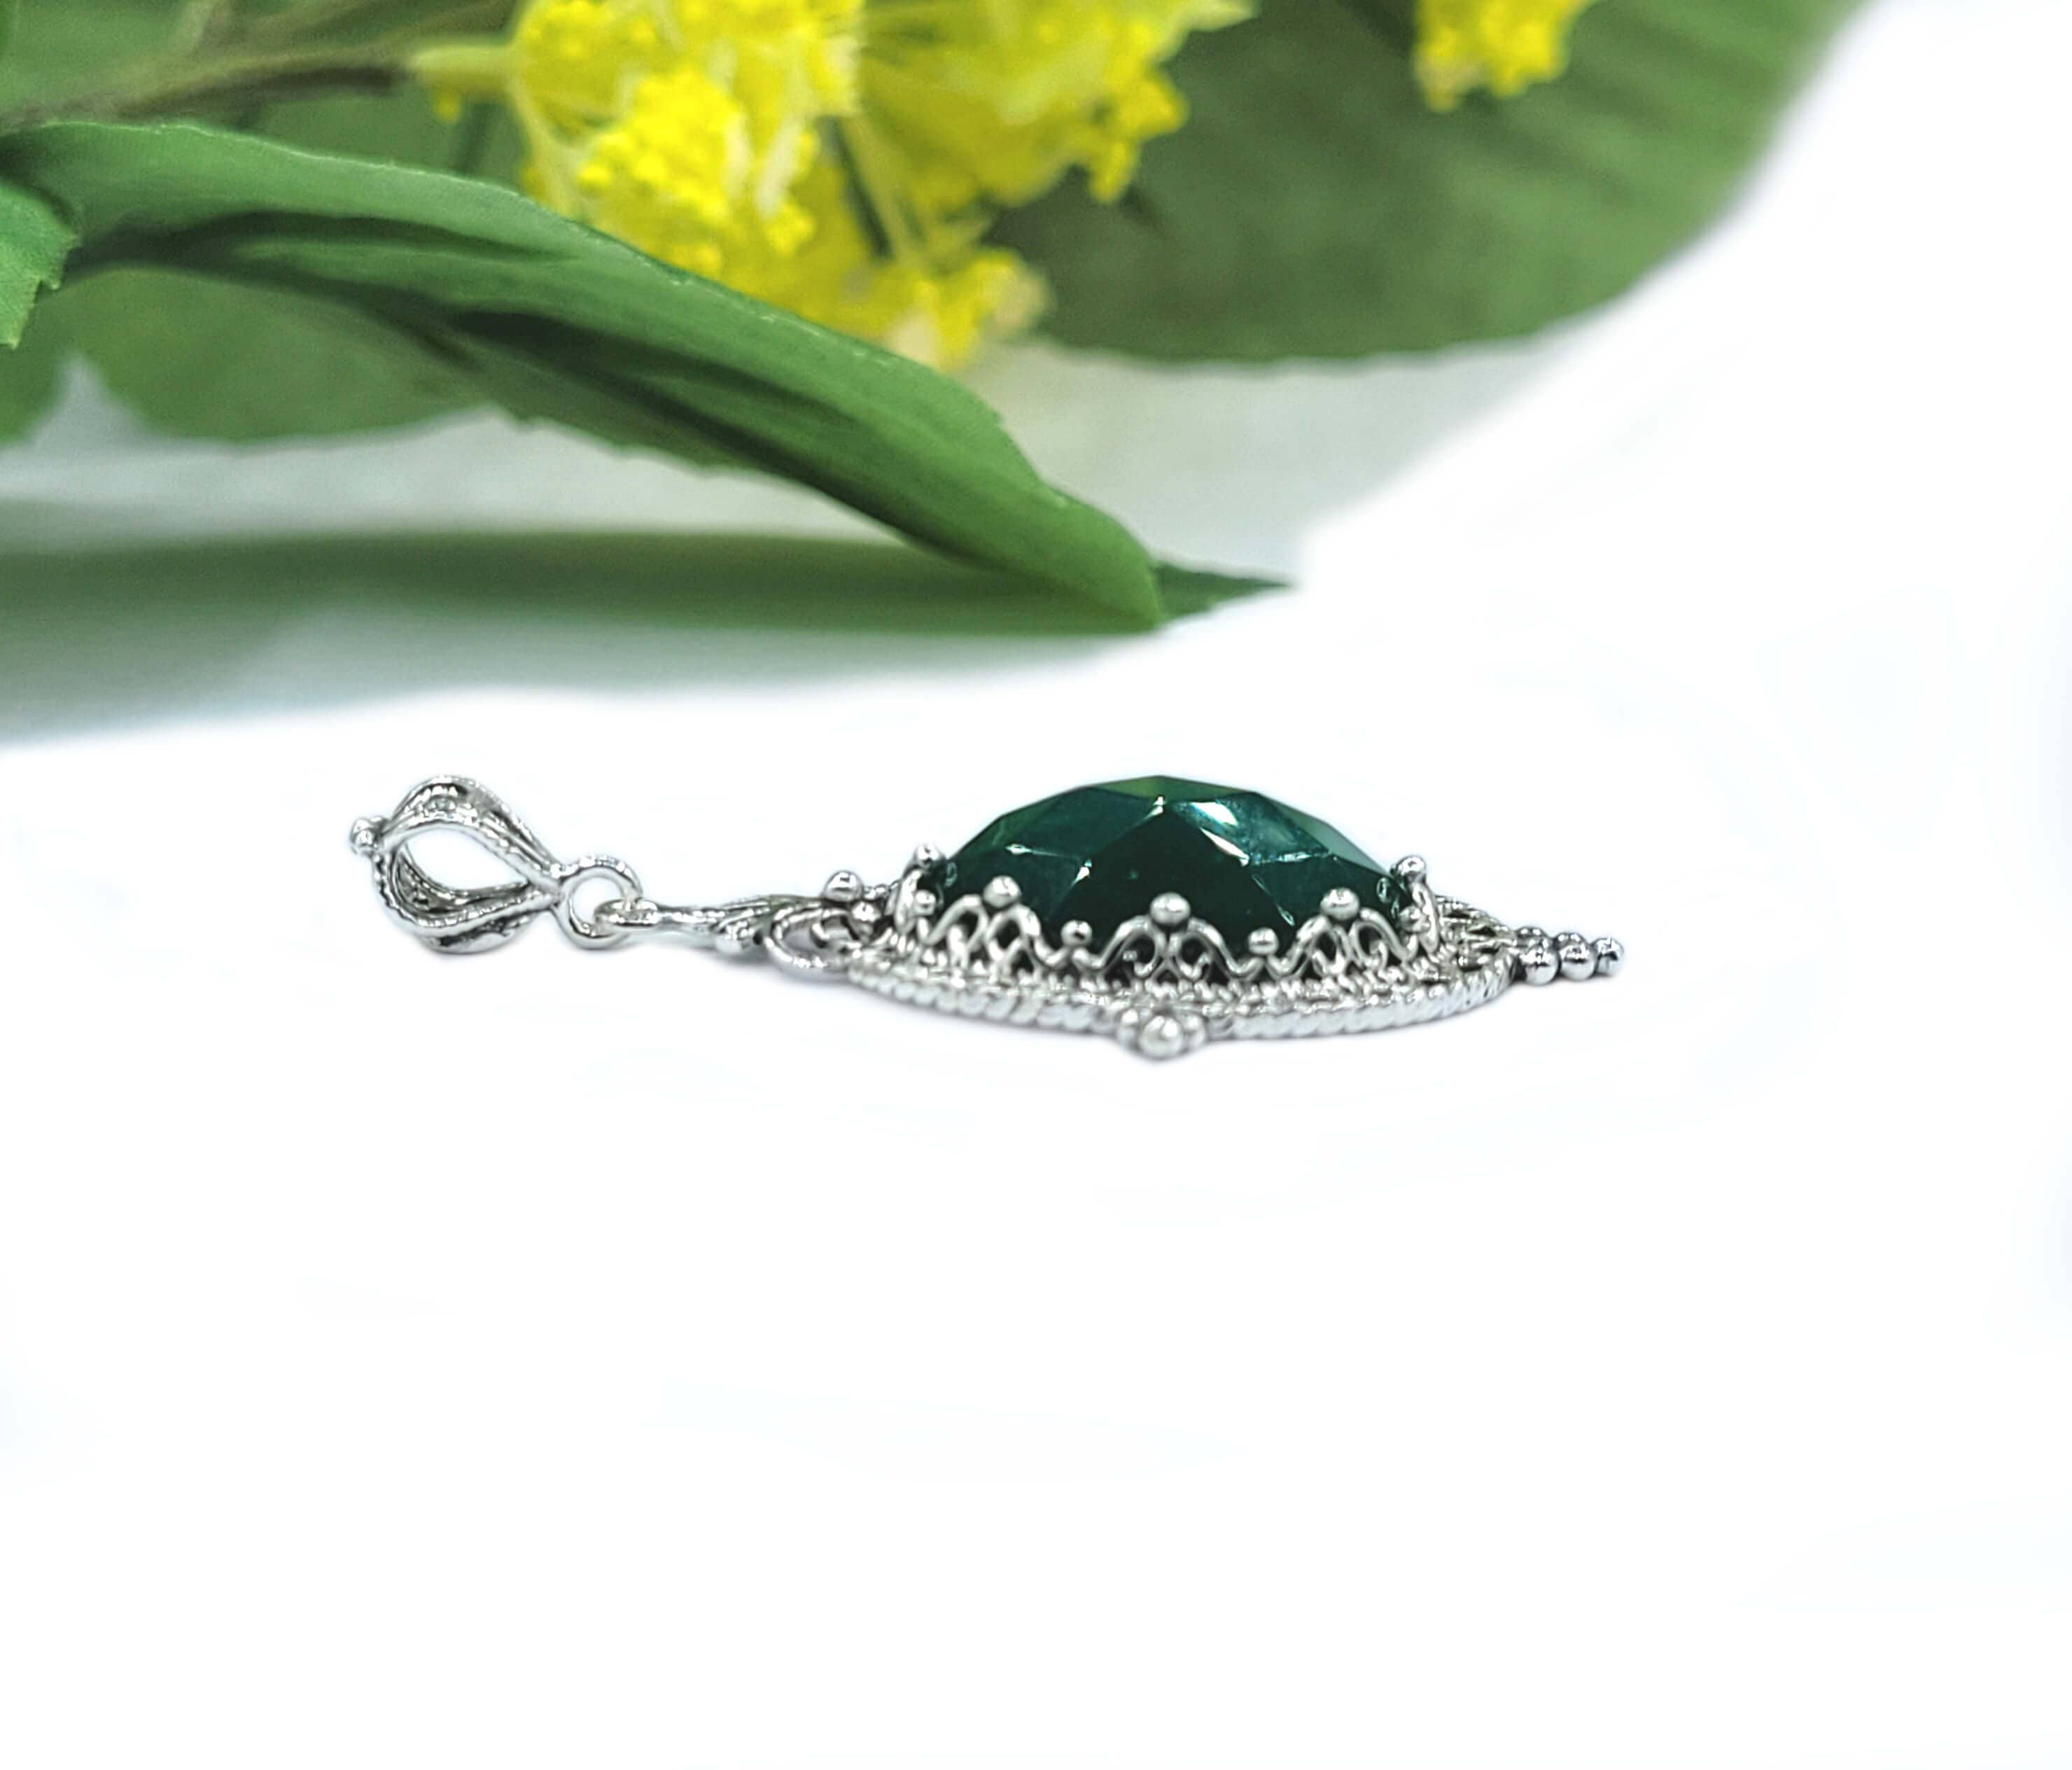 Filigree Art Green Agate Gemstone Women Silver Oval Pendant Necklace